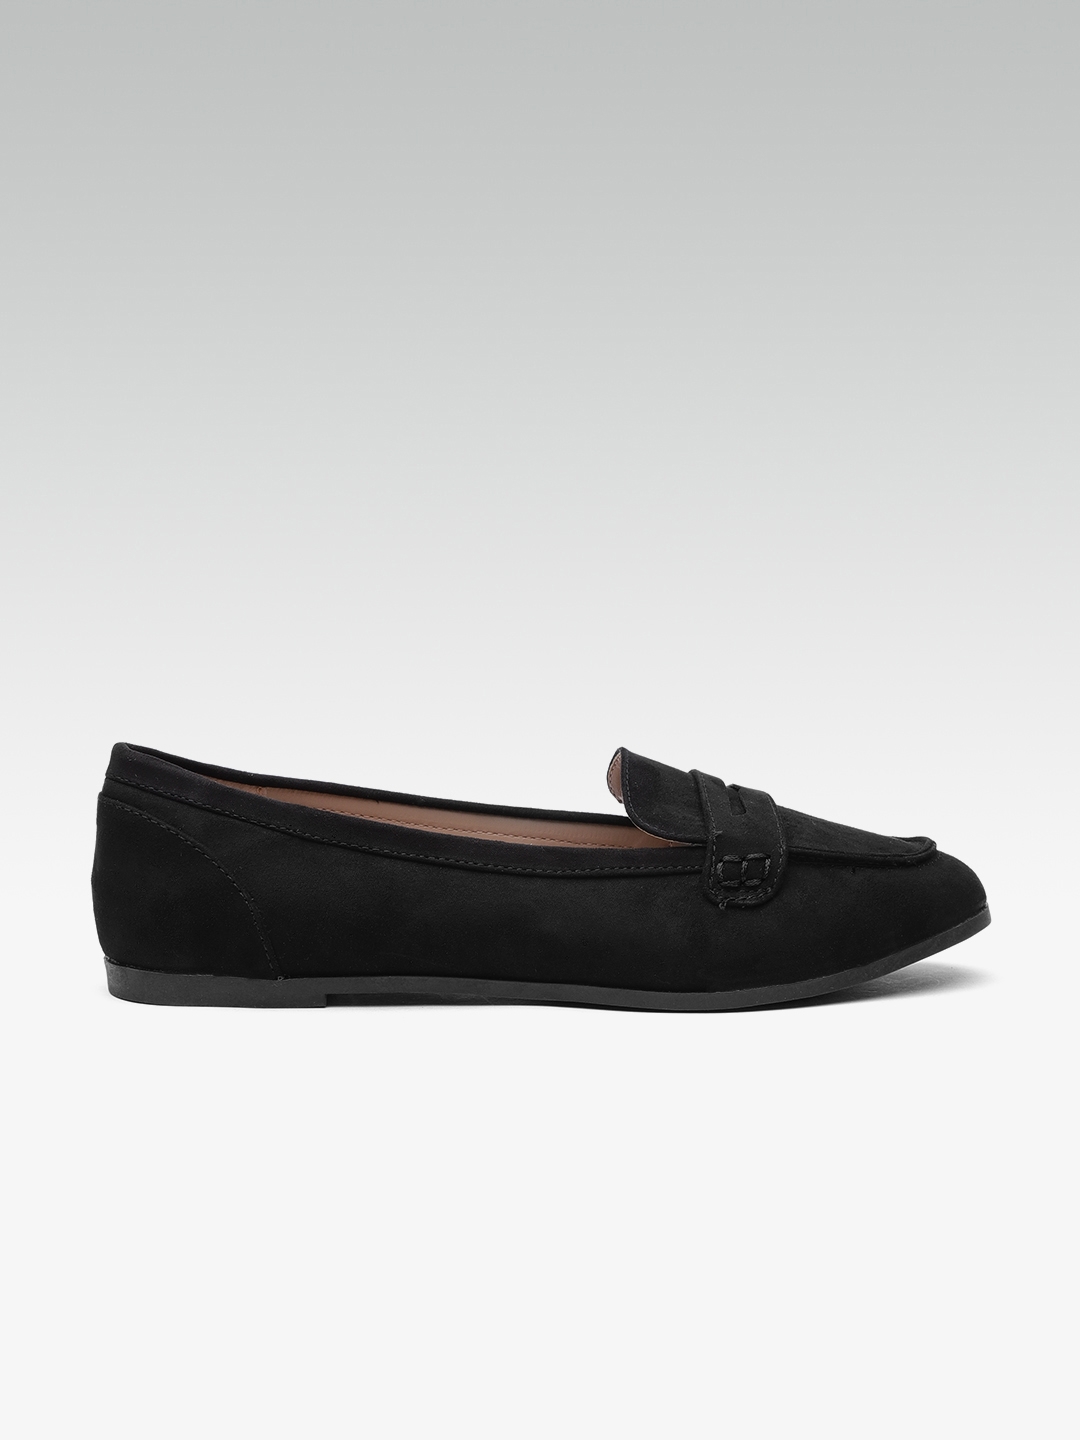 dorothy perkins black shoes